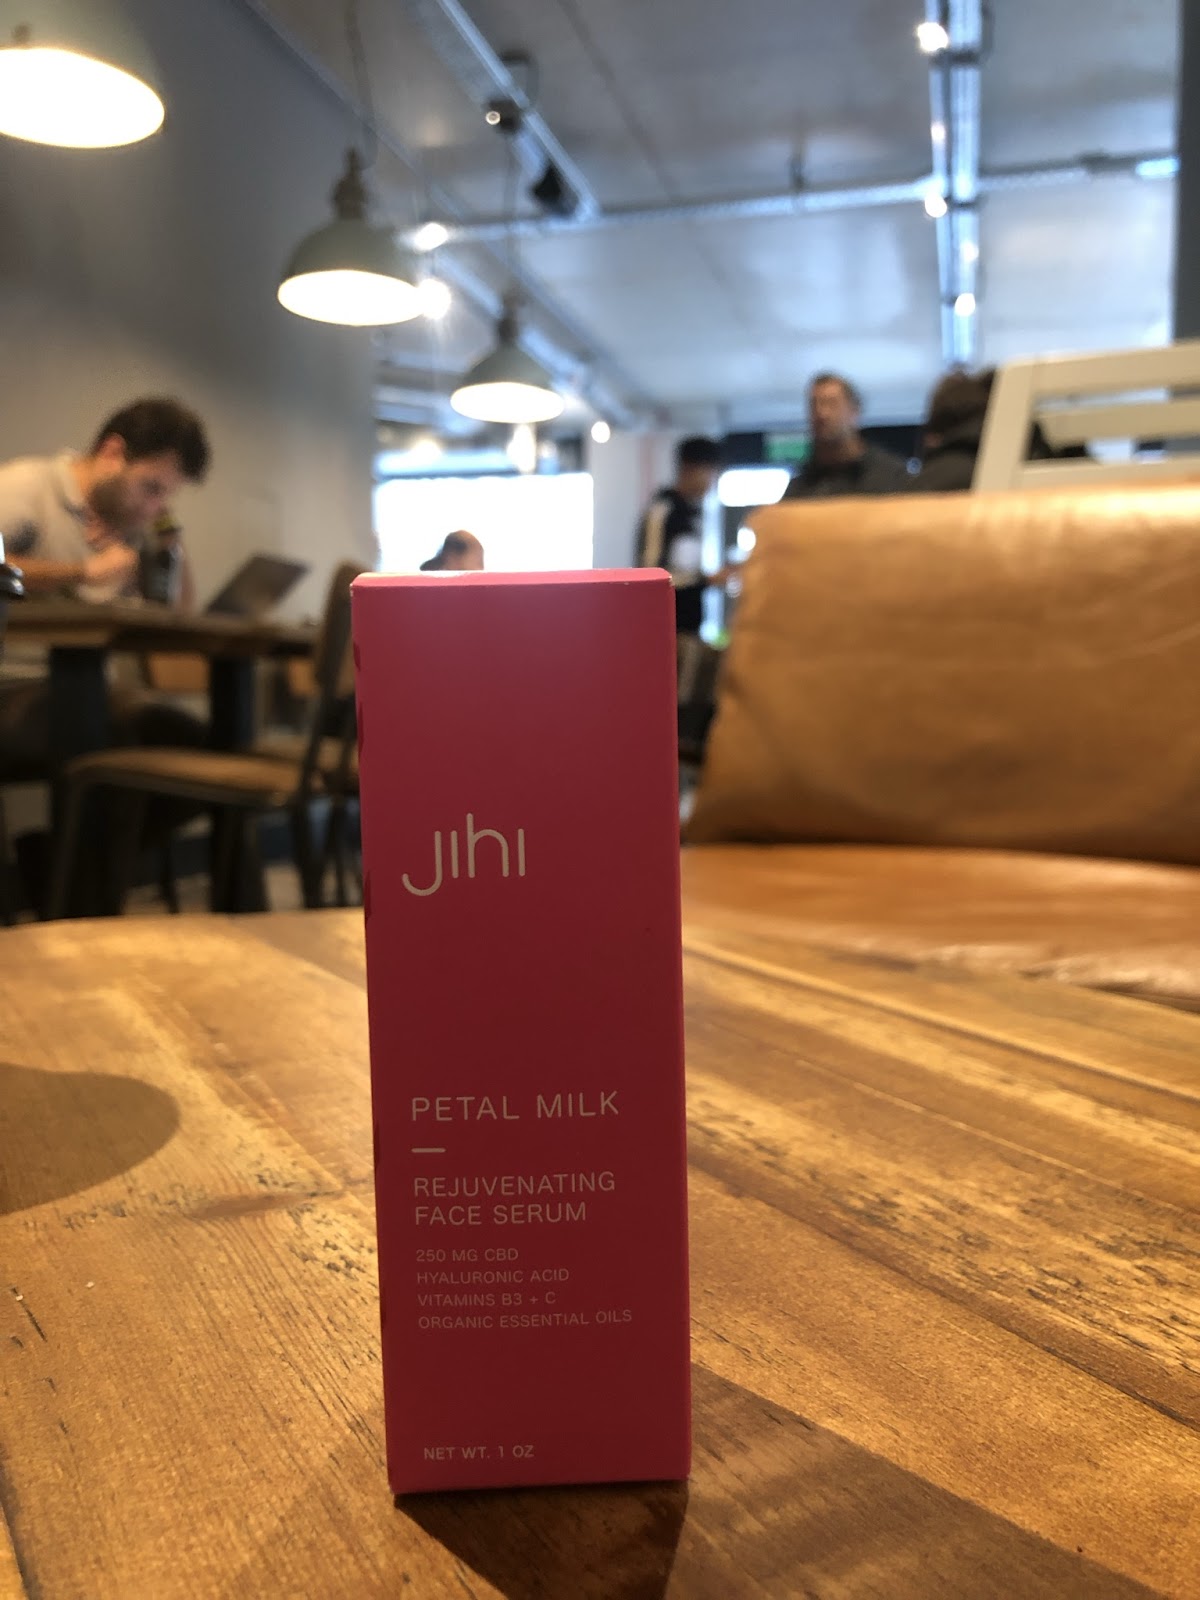 Jihi Petal Milk Rejuvenating Face Serum
